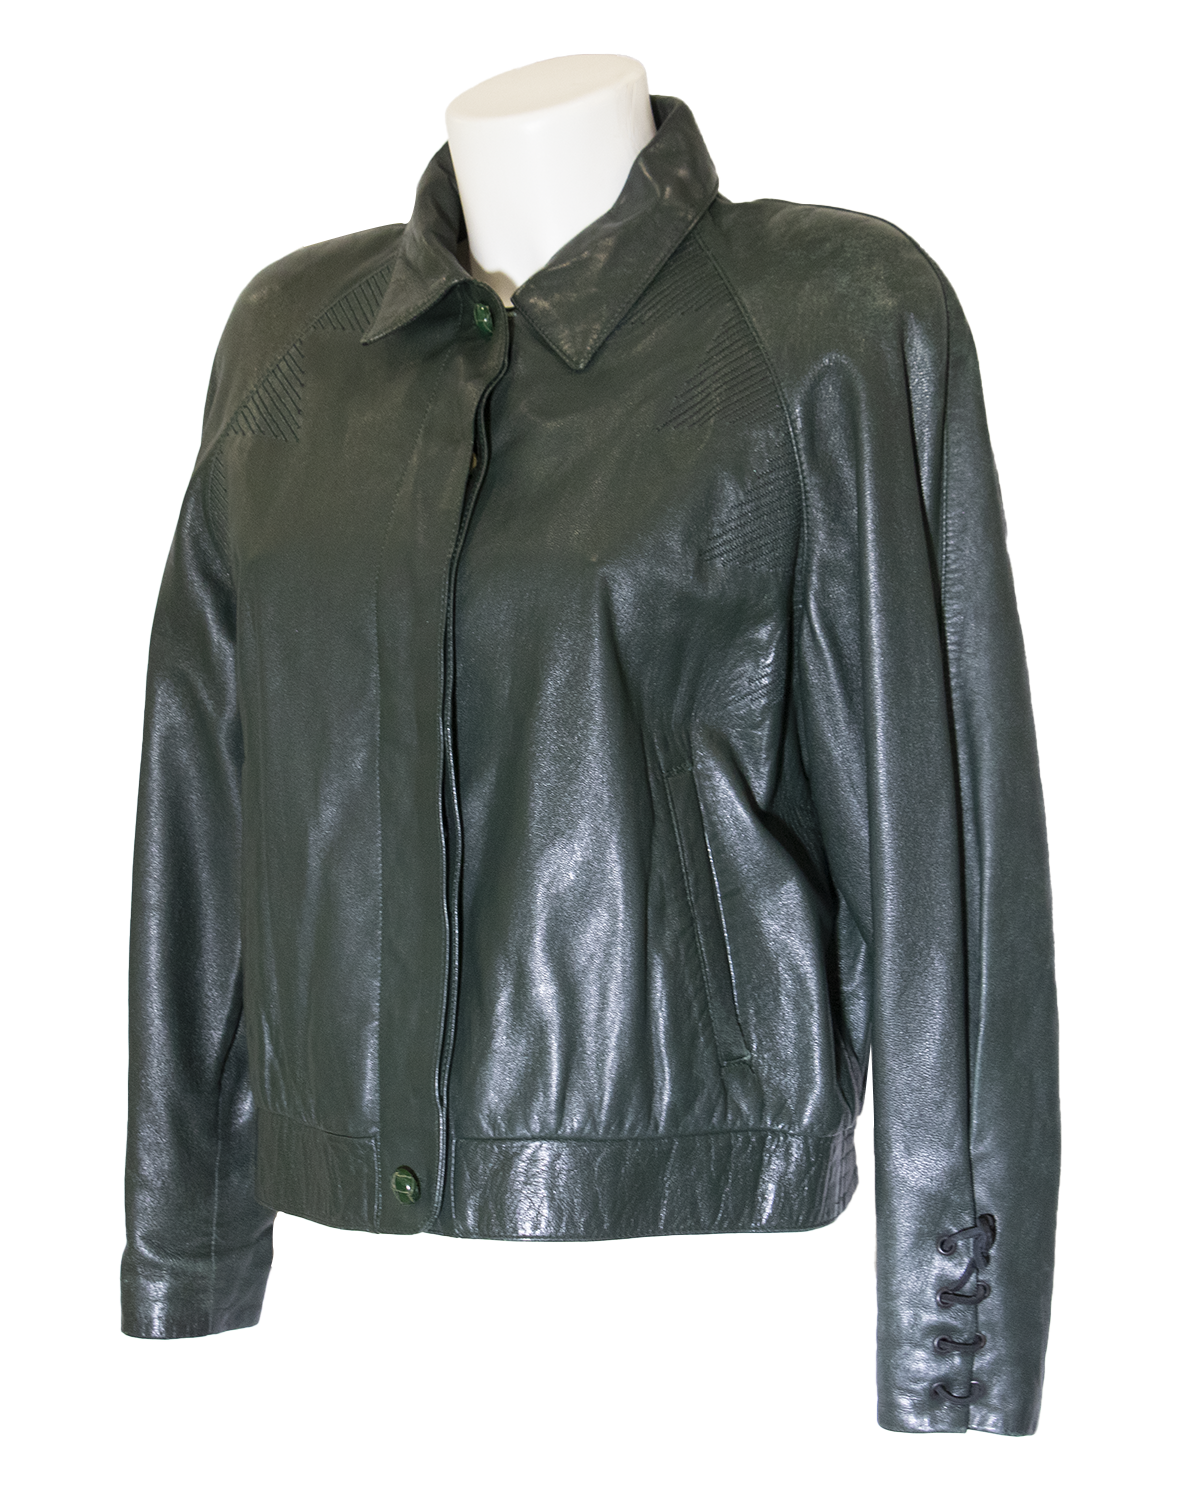 Valentino - Jacket from 1980s/90s